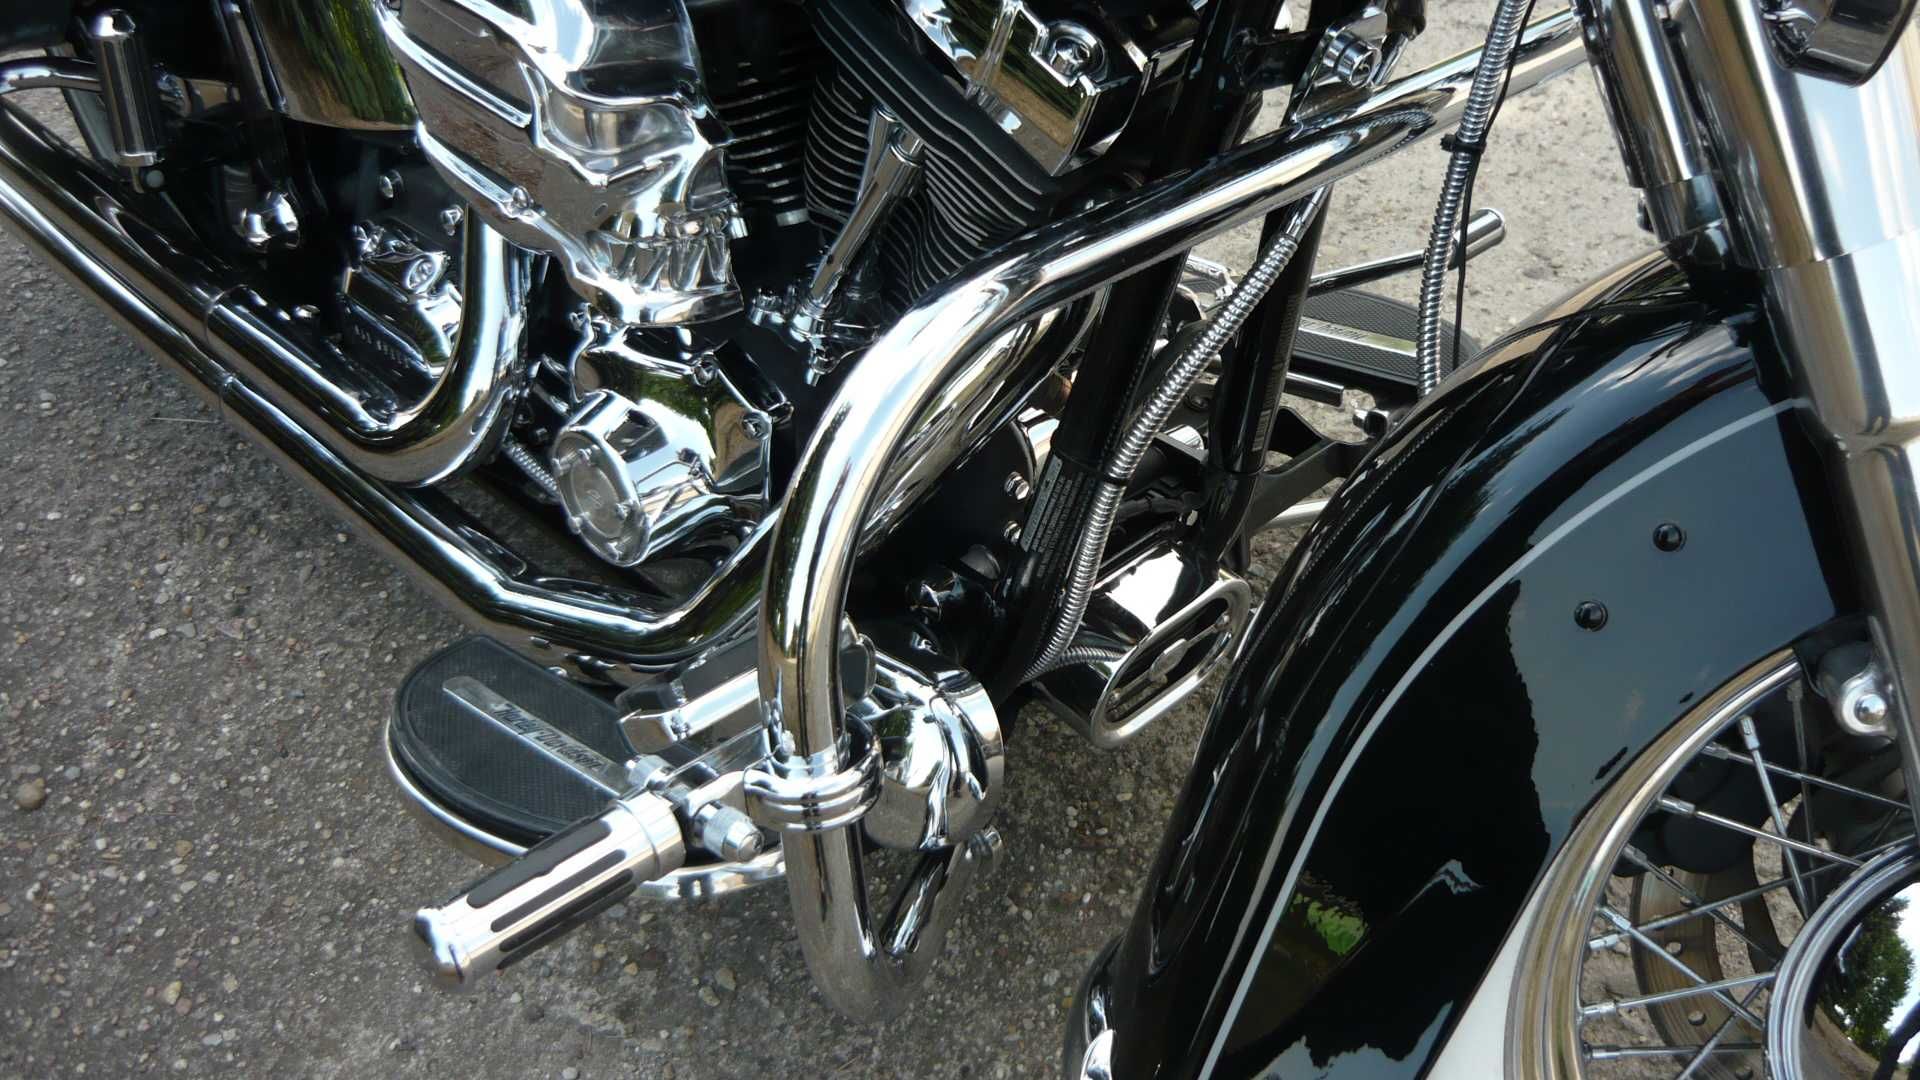 Harley heritage softail